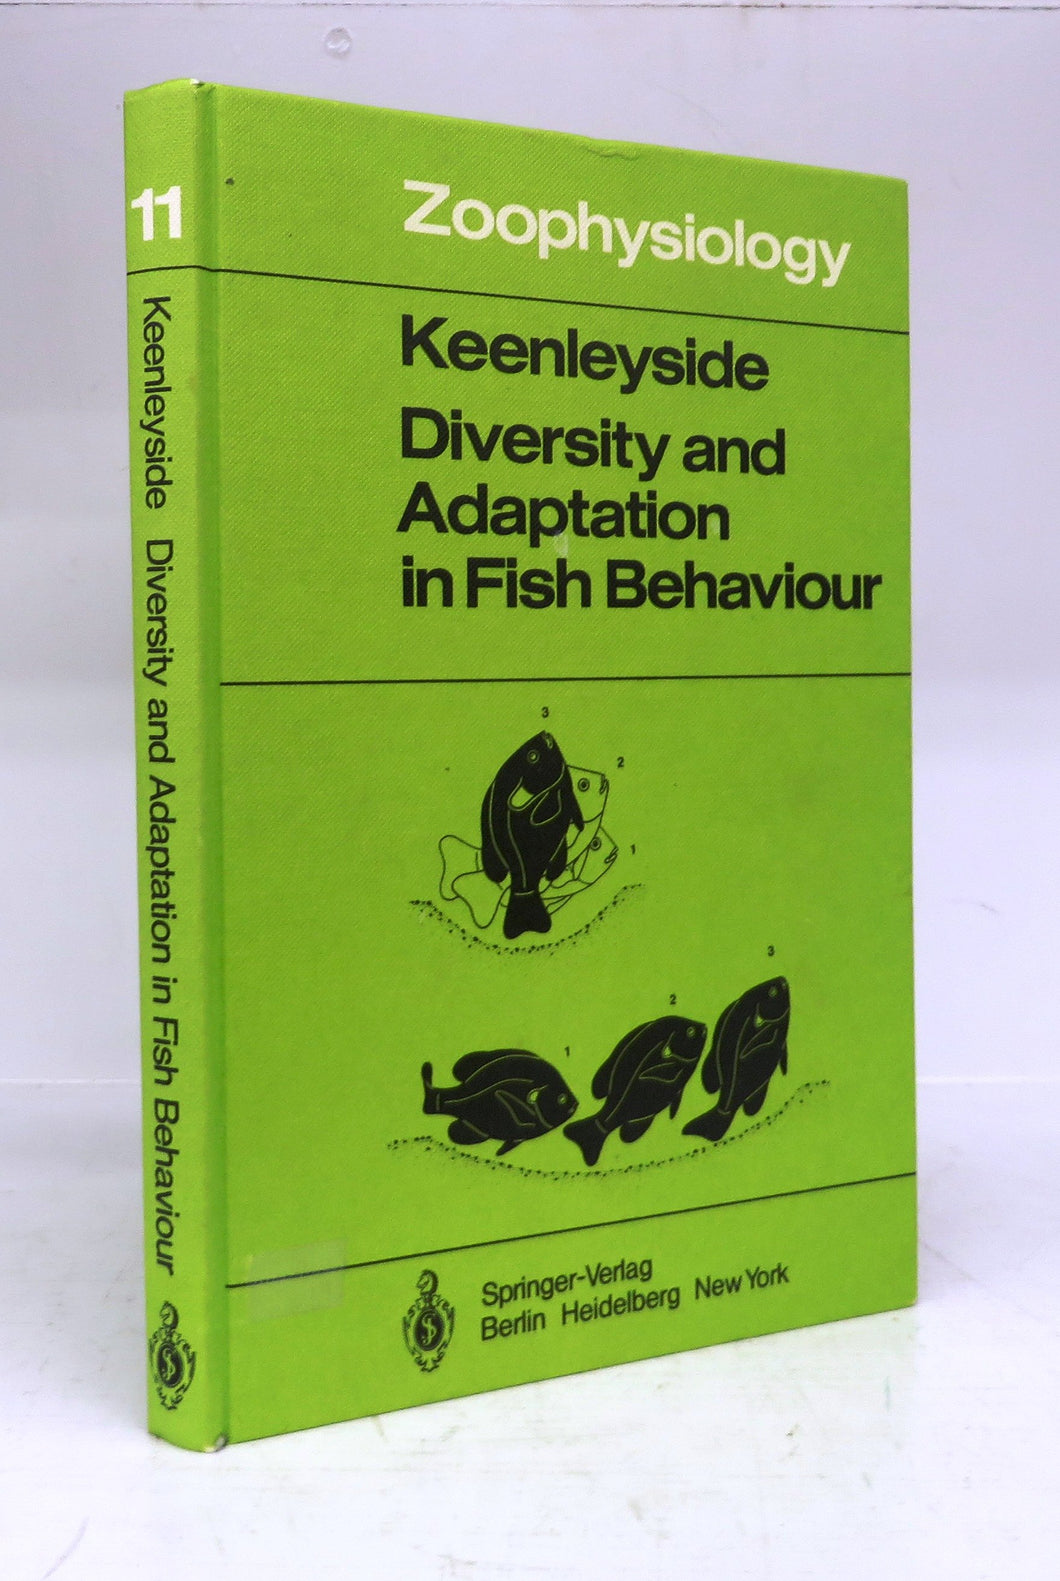 Diversity and Adaptation in Fish Behaviour